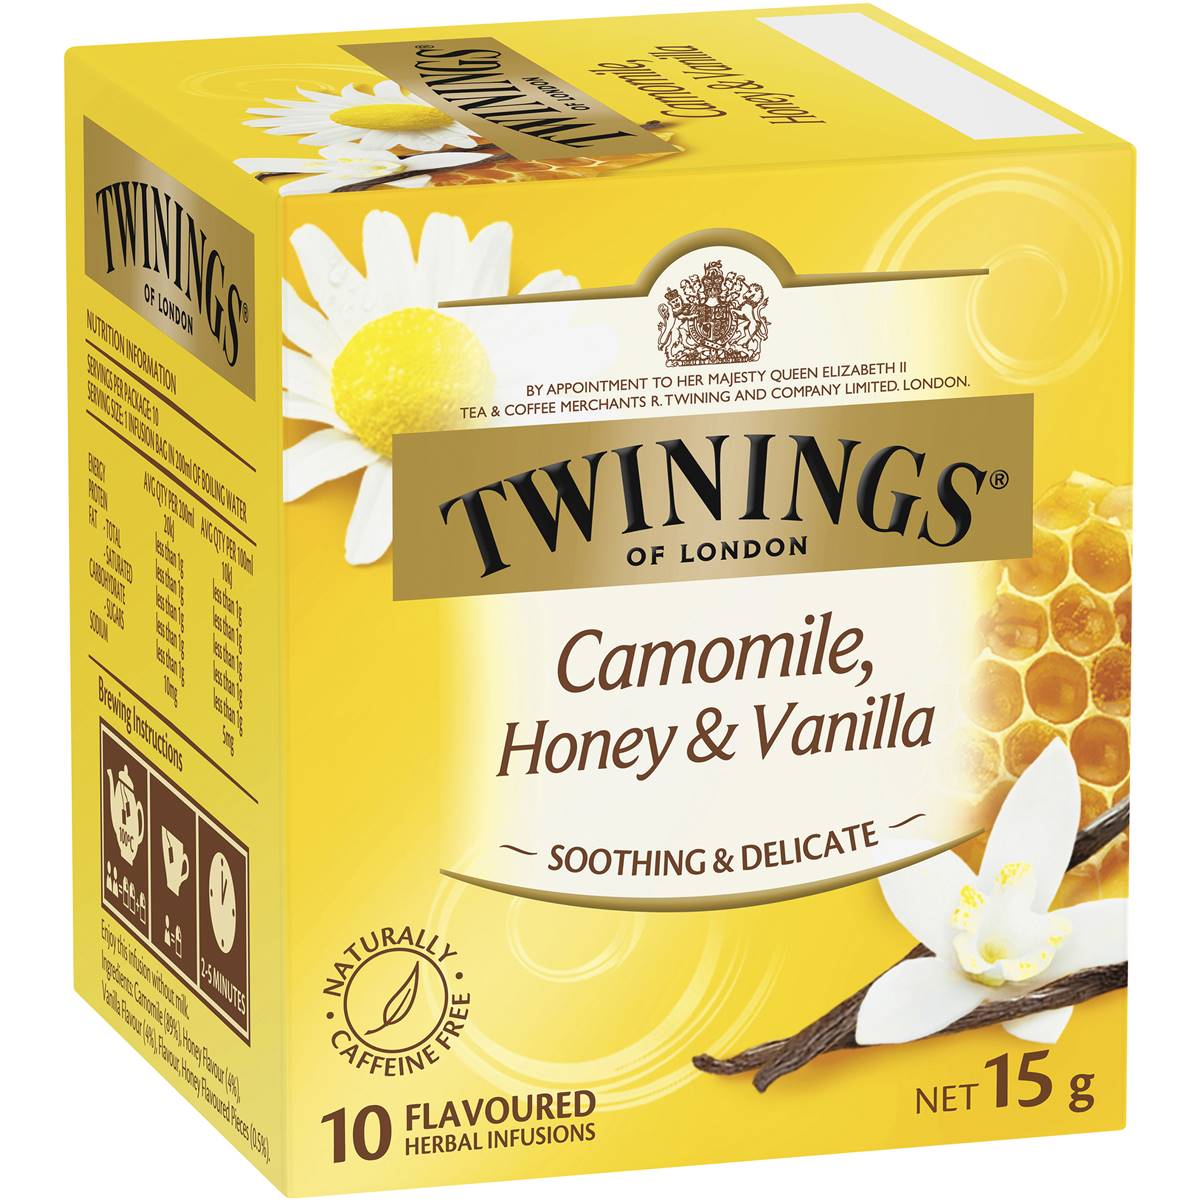 Twinings Camomile, Honey & Vanilla Tea bags 15g x 10